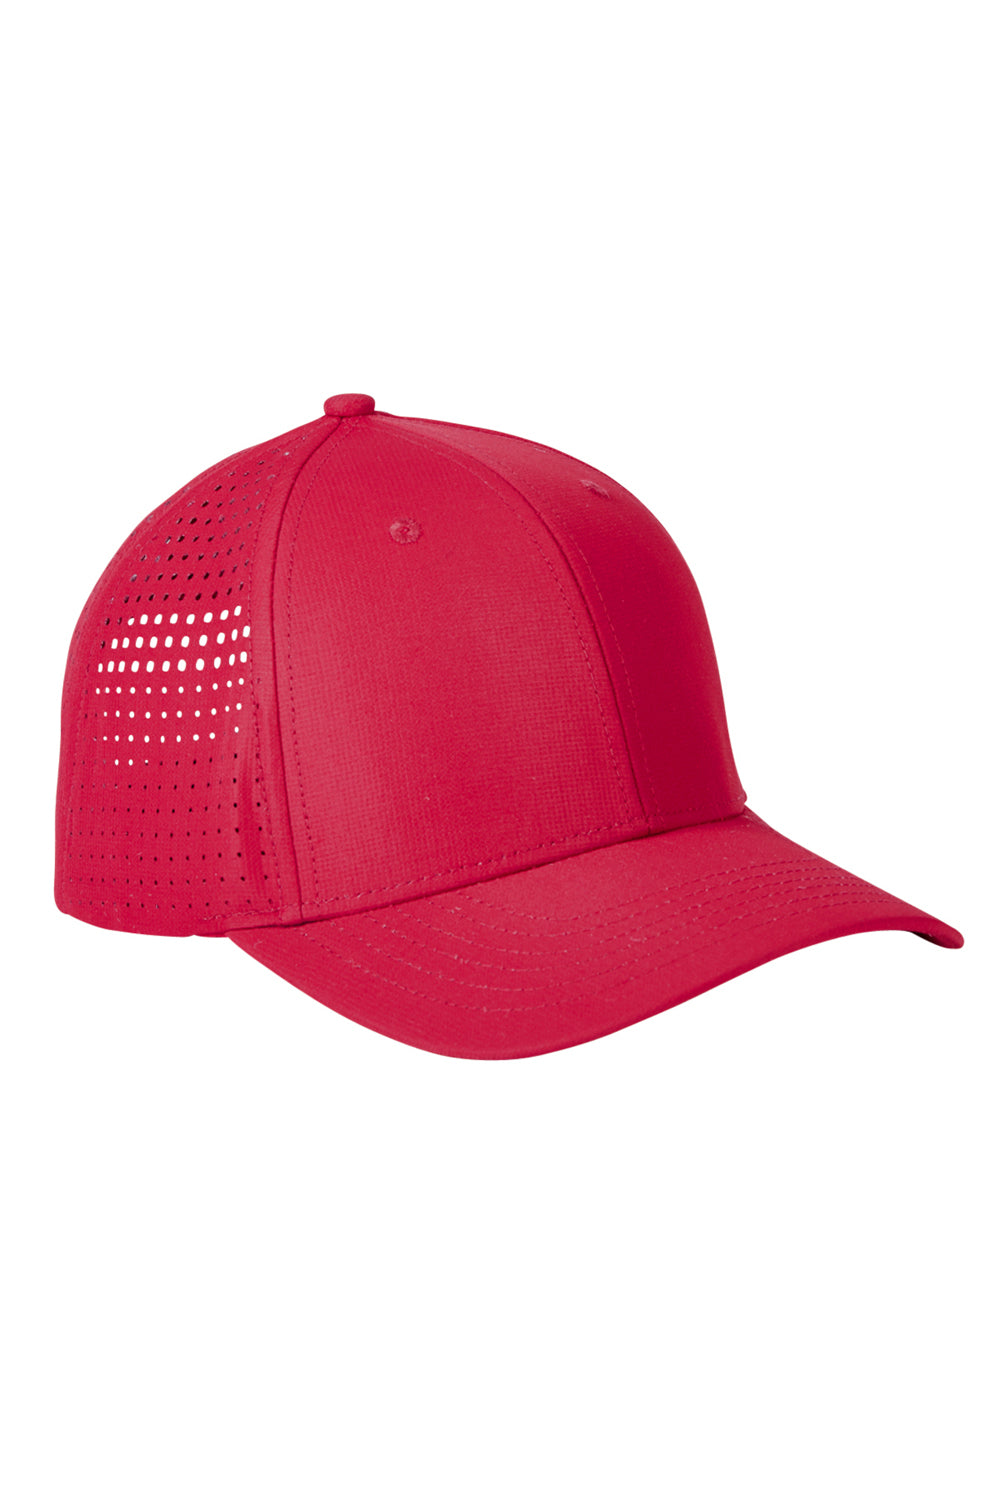 Big Accessories BA537 Mens Performance Adjustable Hat Red Flat Front